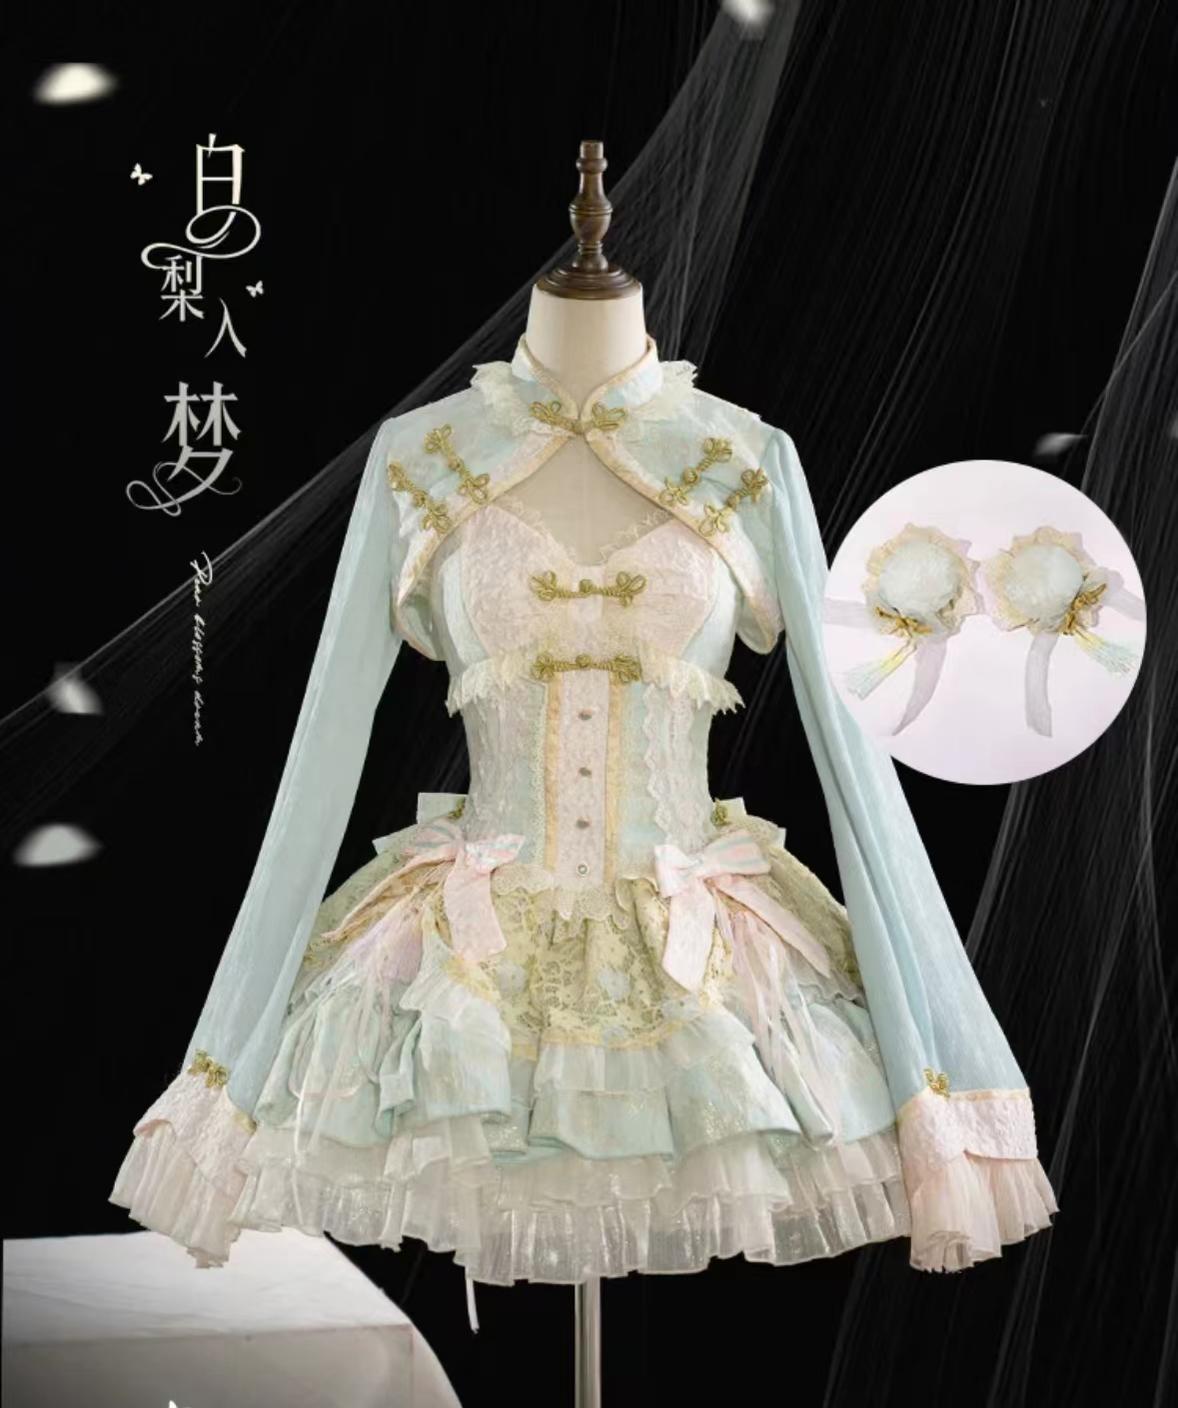 Mewroco~White Pear Dream~Han Lolita JSK Dress Halter Dress for Summer Wear S Green jsk + cape (with hair accessory) 